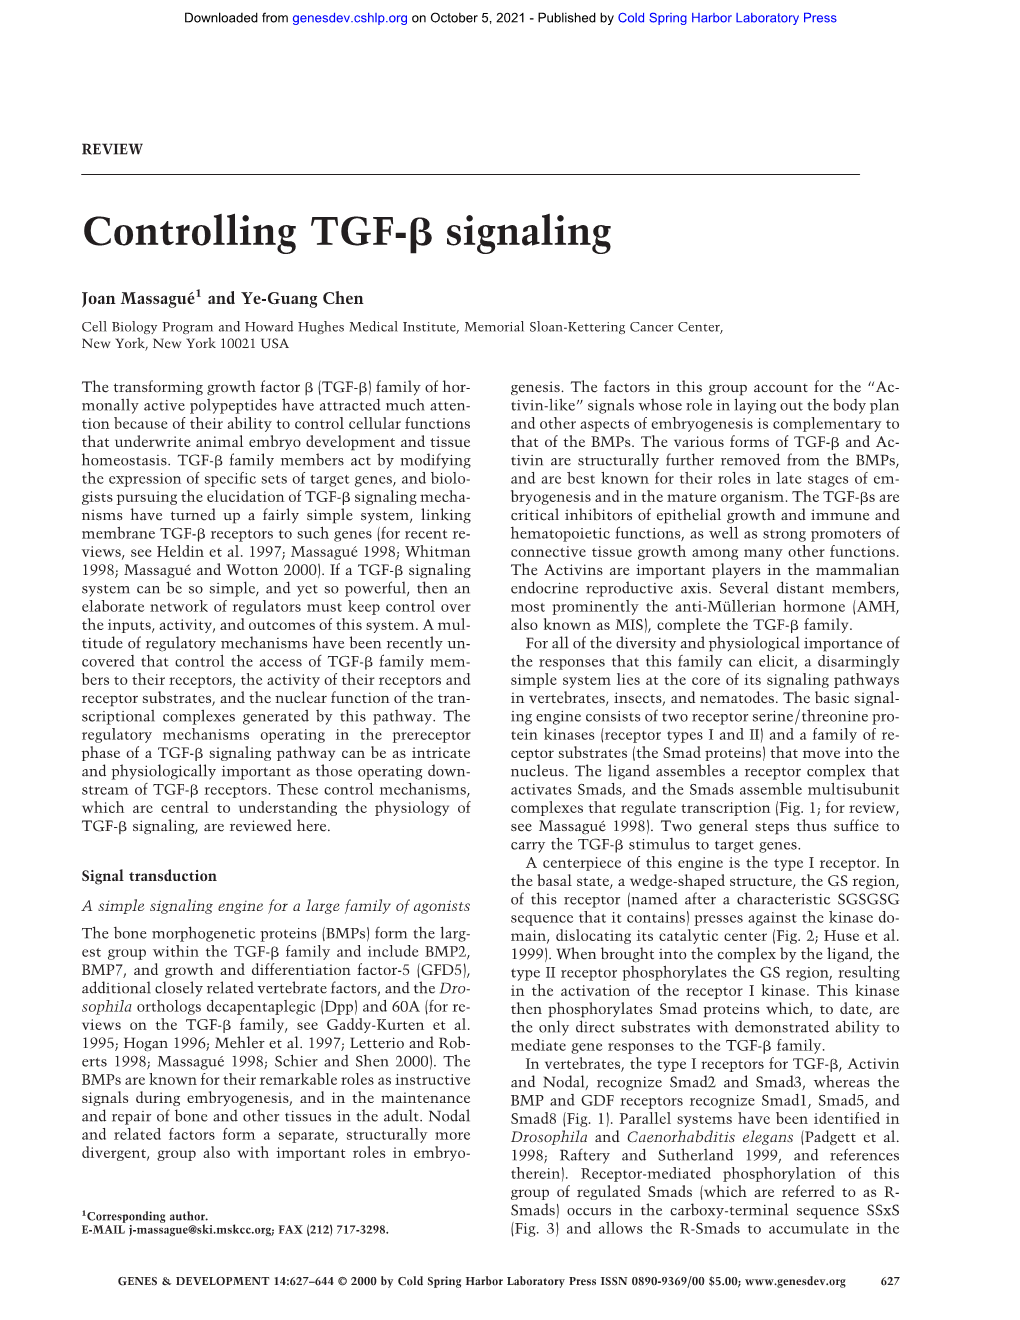 Controlling TGF-ß Signaling